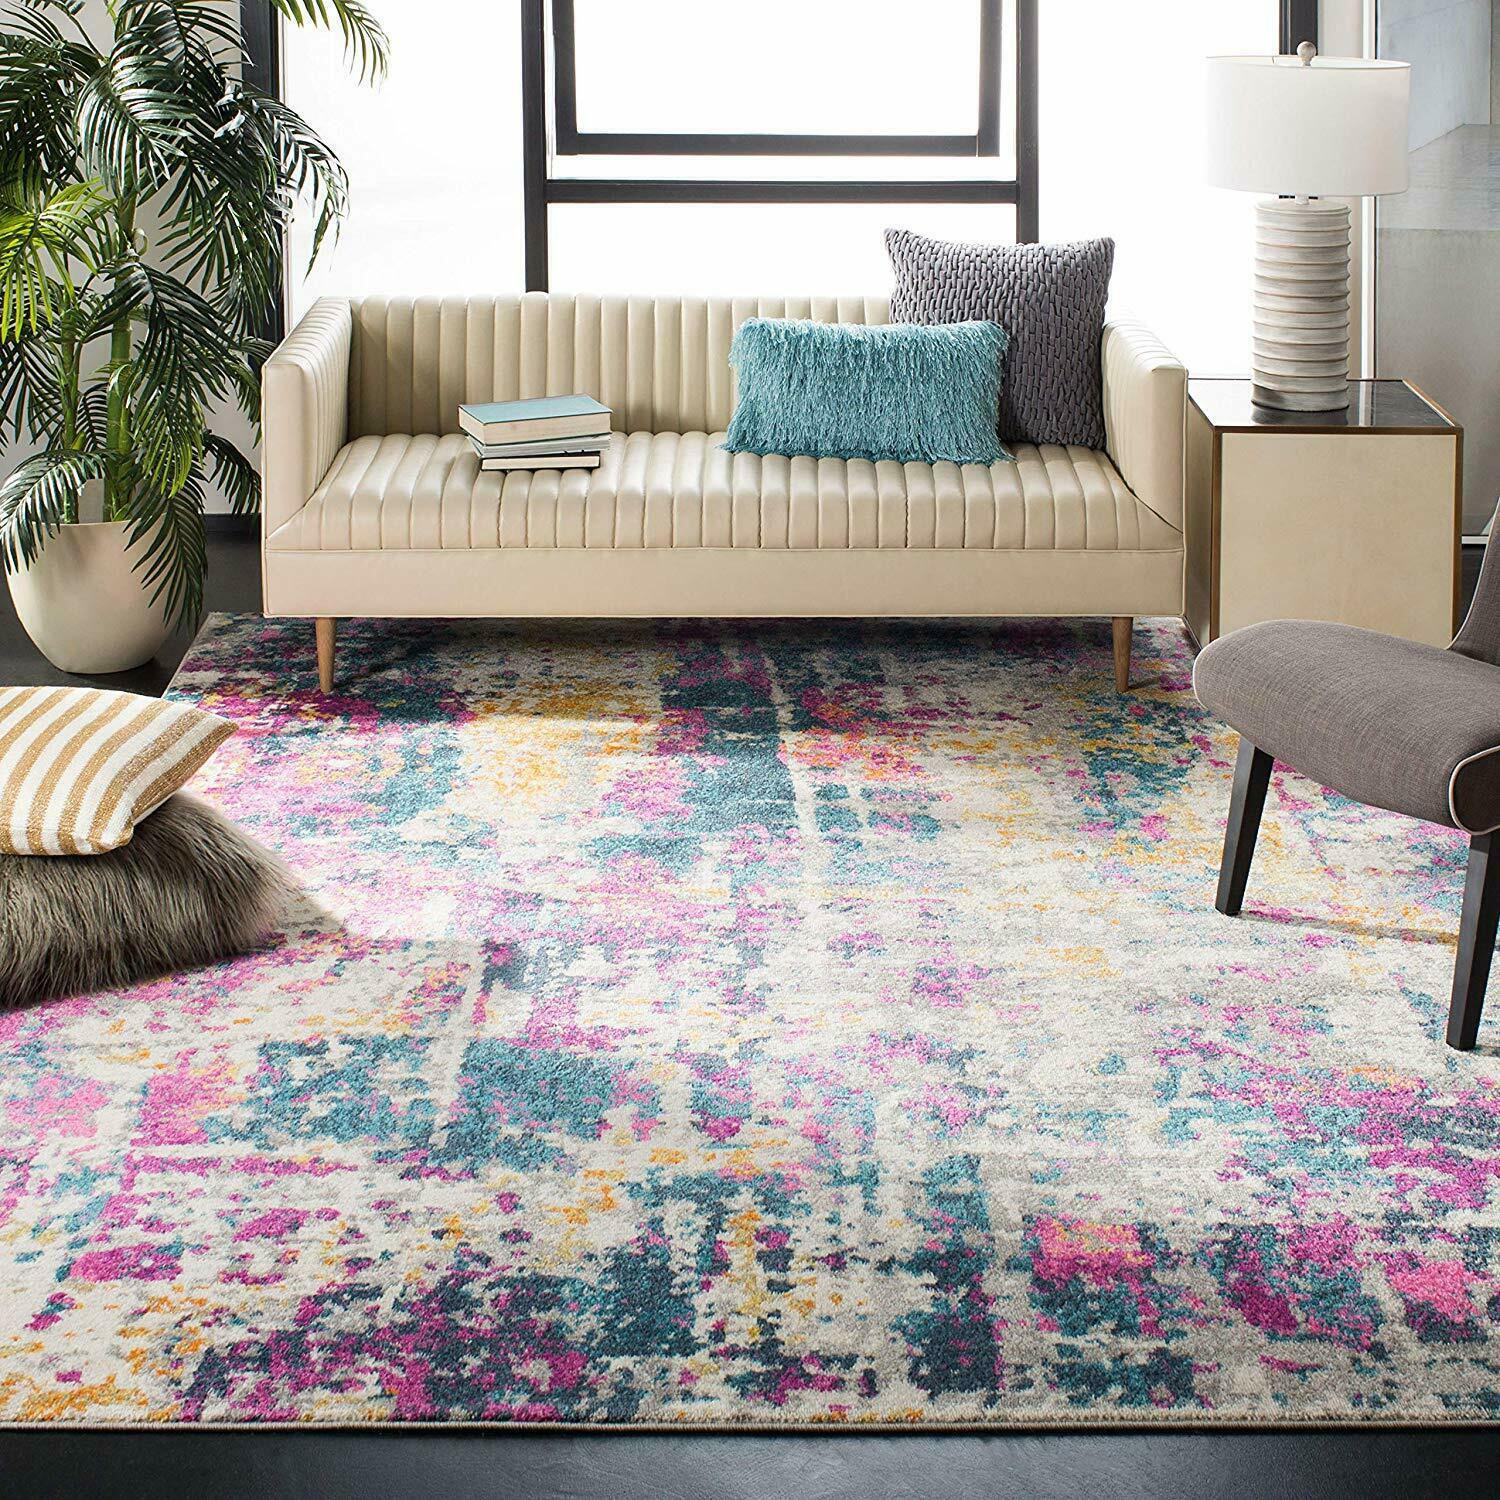 Nice carpet